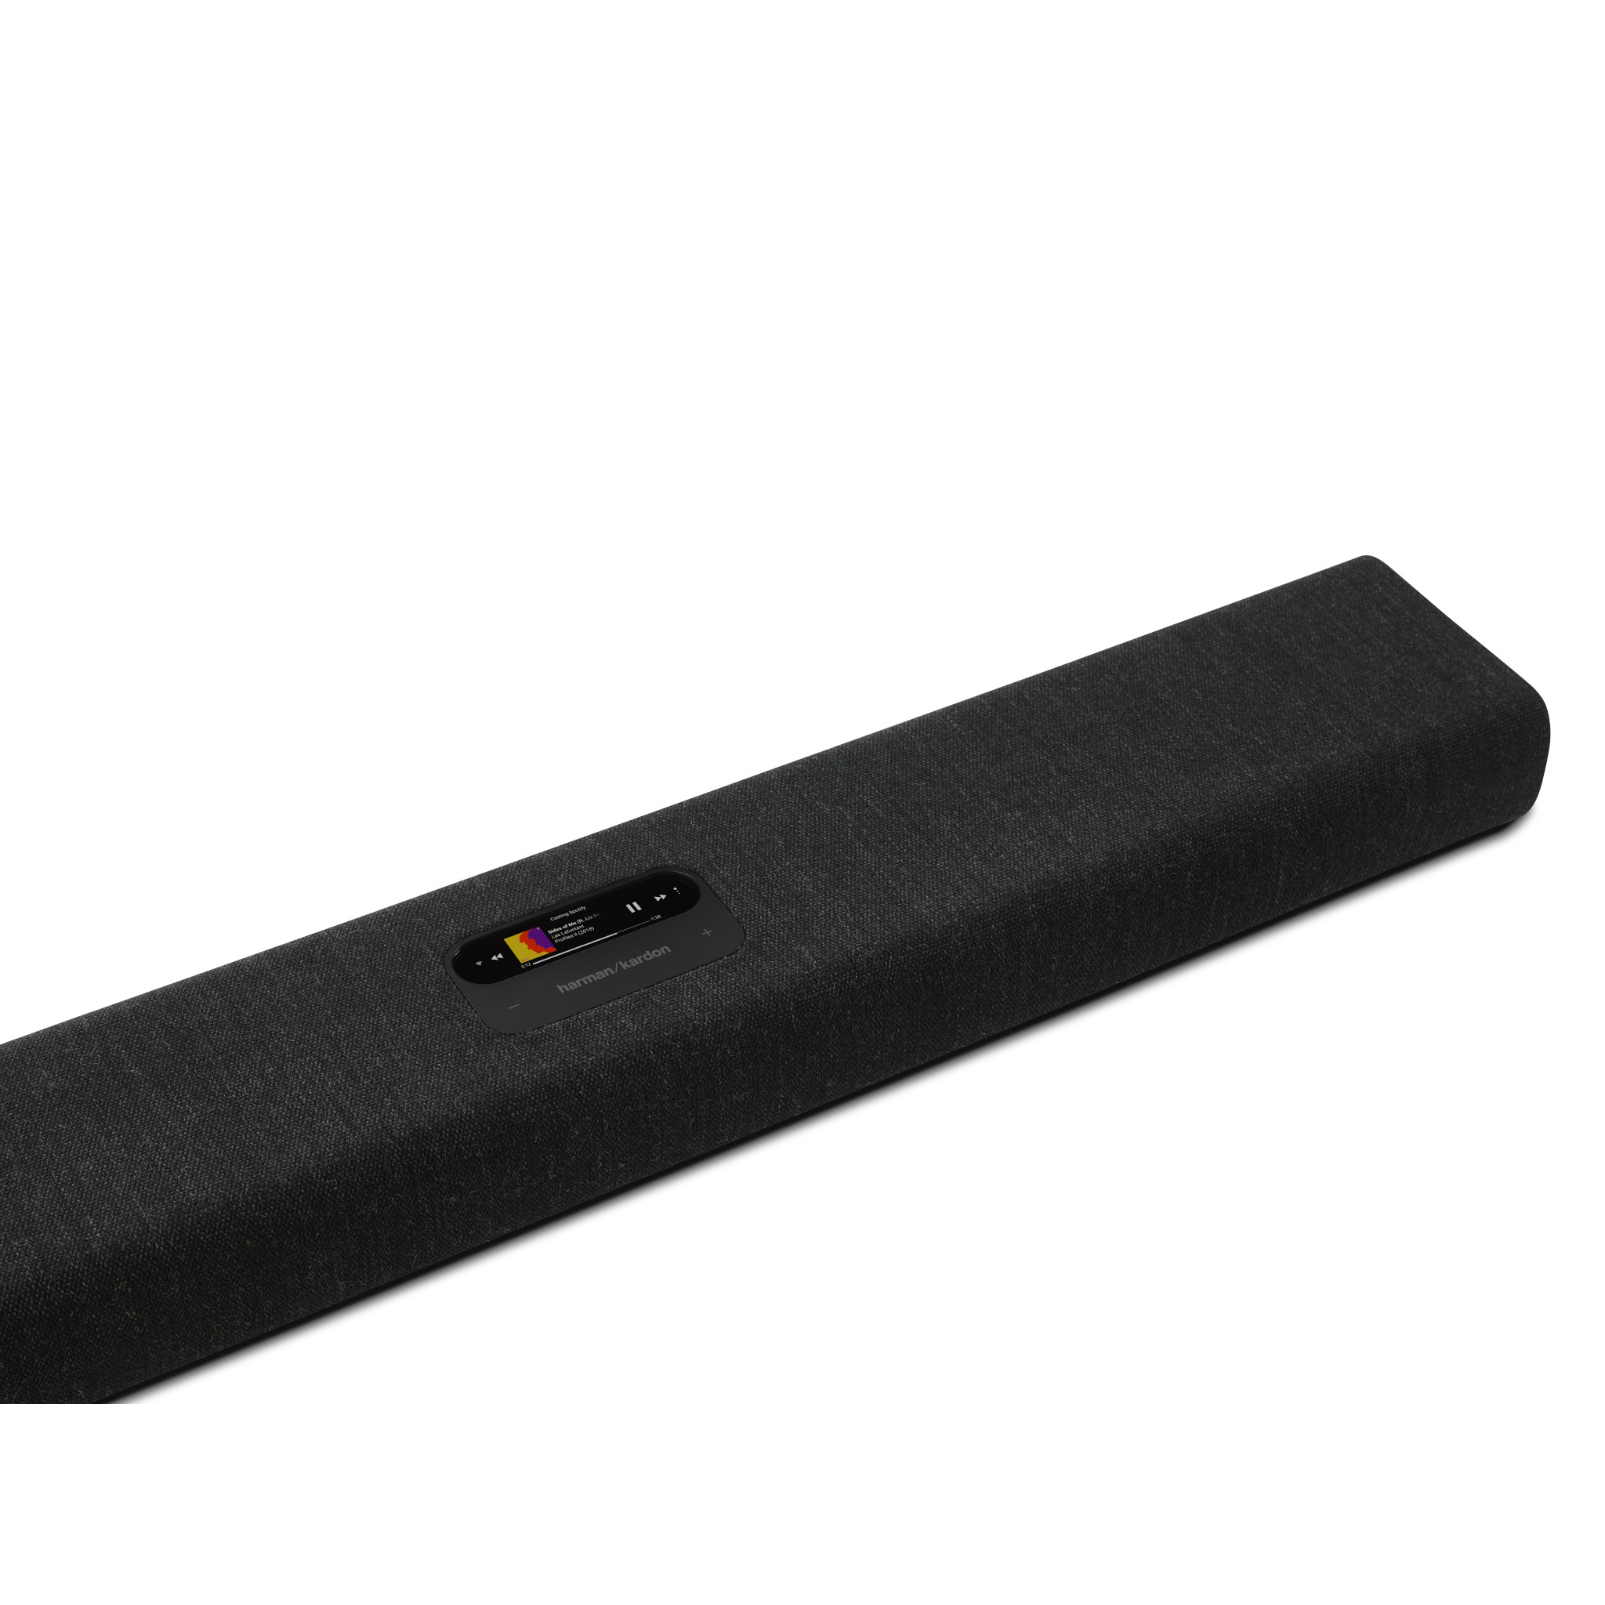 Harman Kardon Citation MultiBeam™ 700 - Black - The smartest, compact soundbar with MultiBeam™ surround sound - Detailshot 1